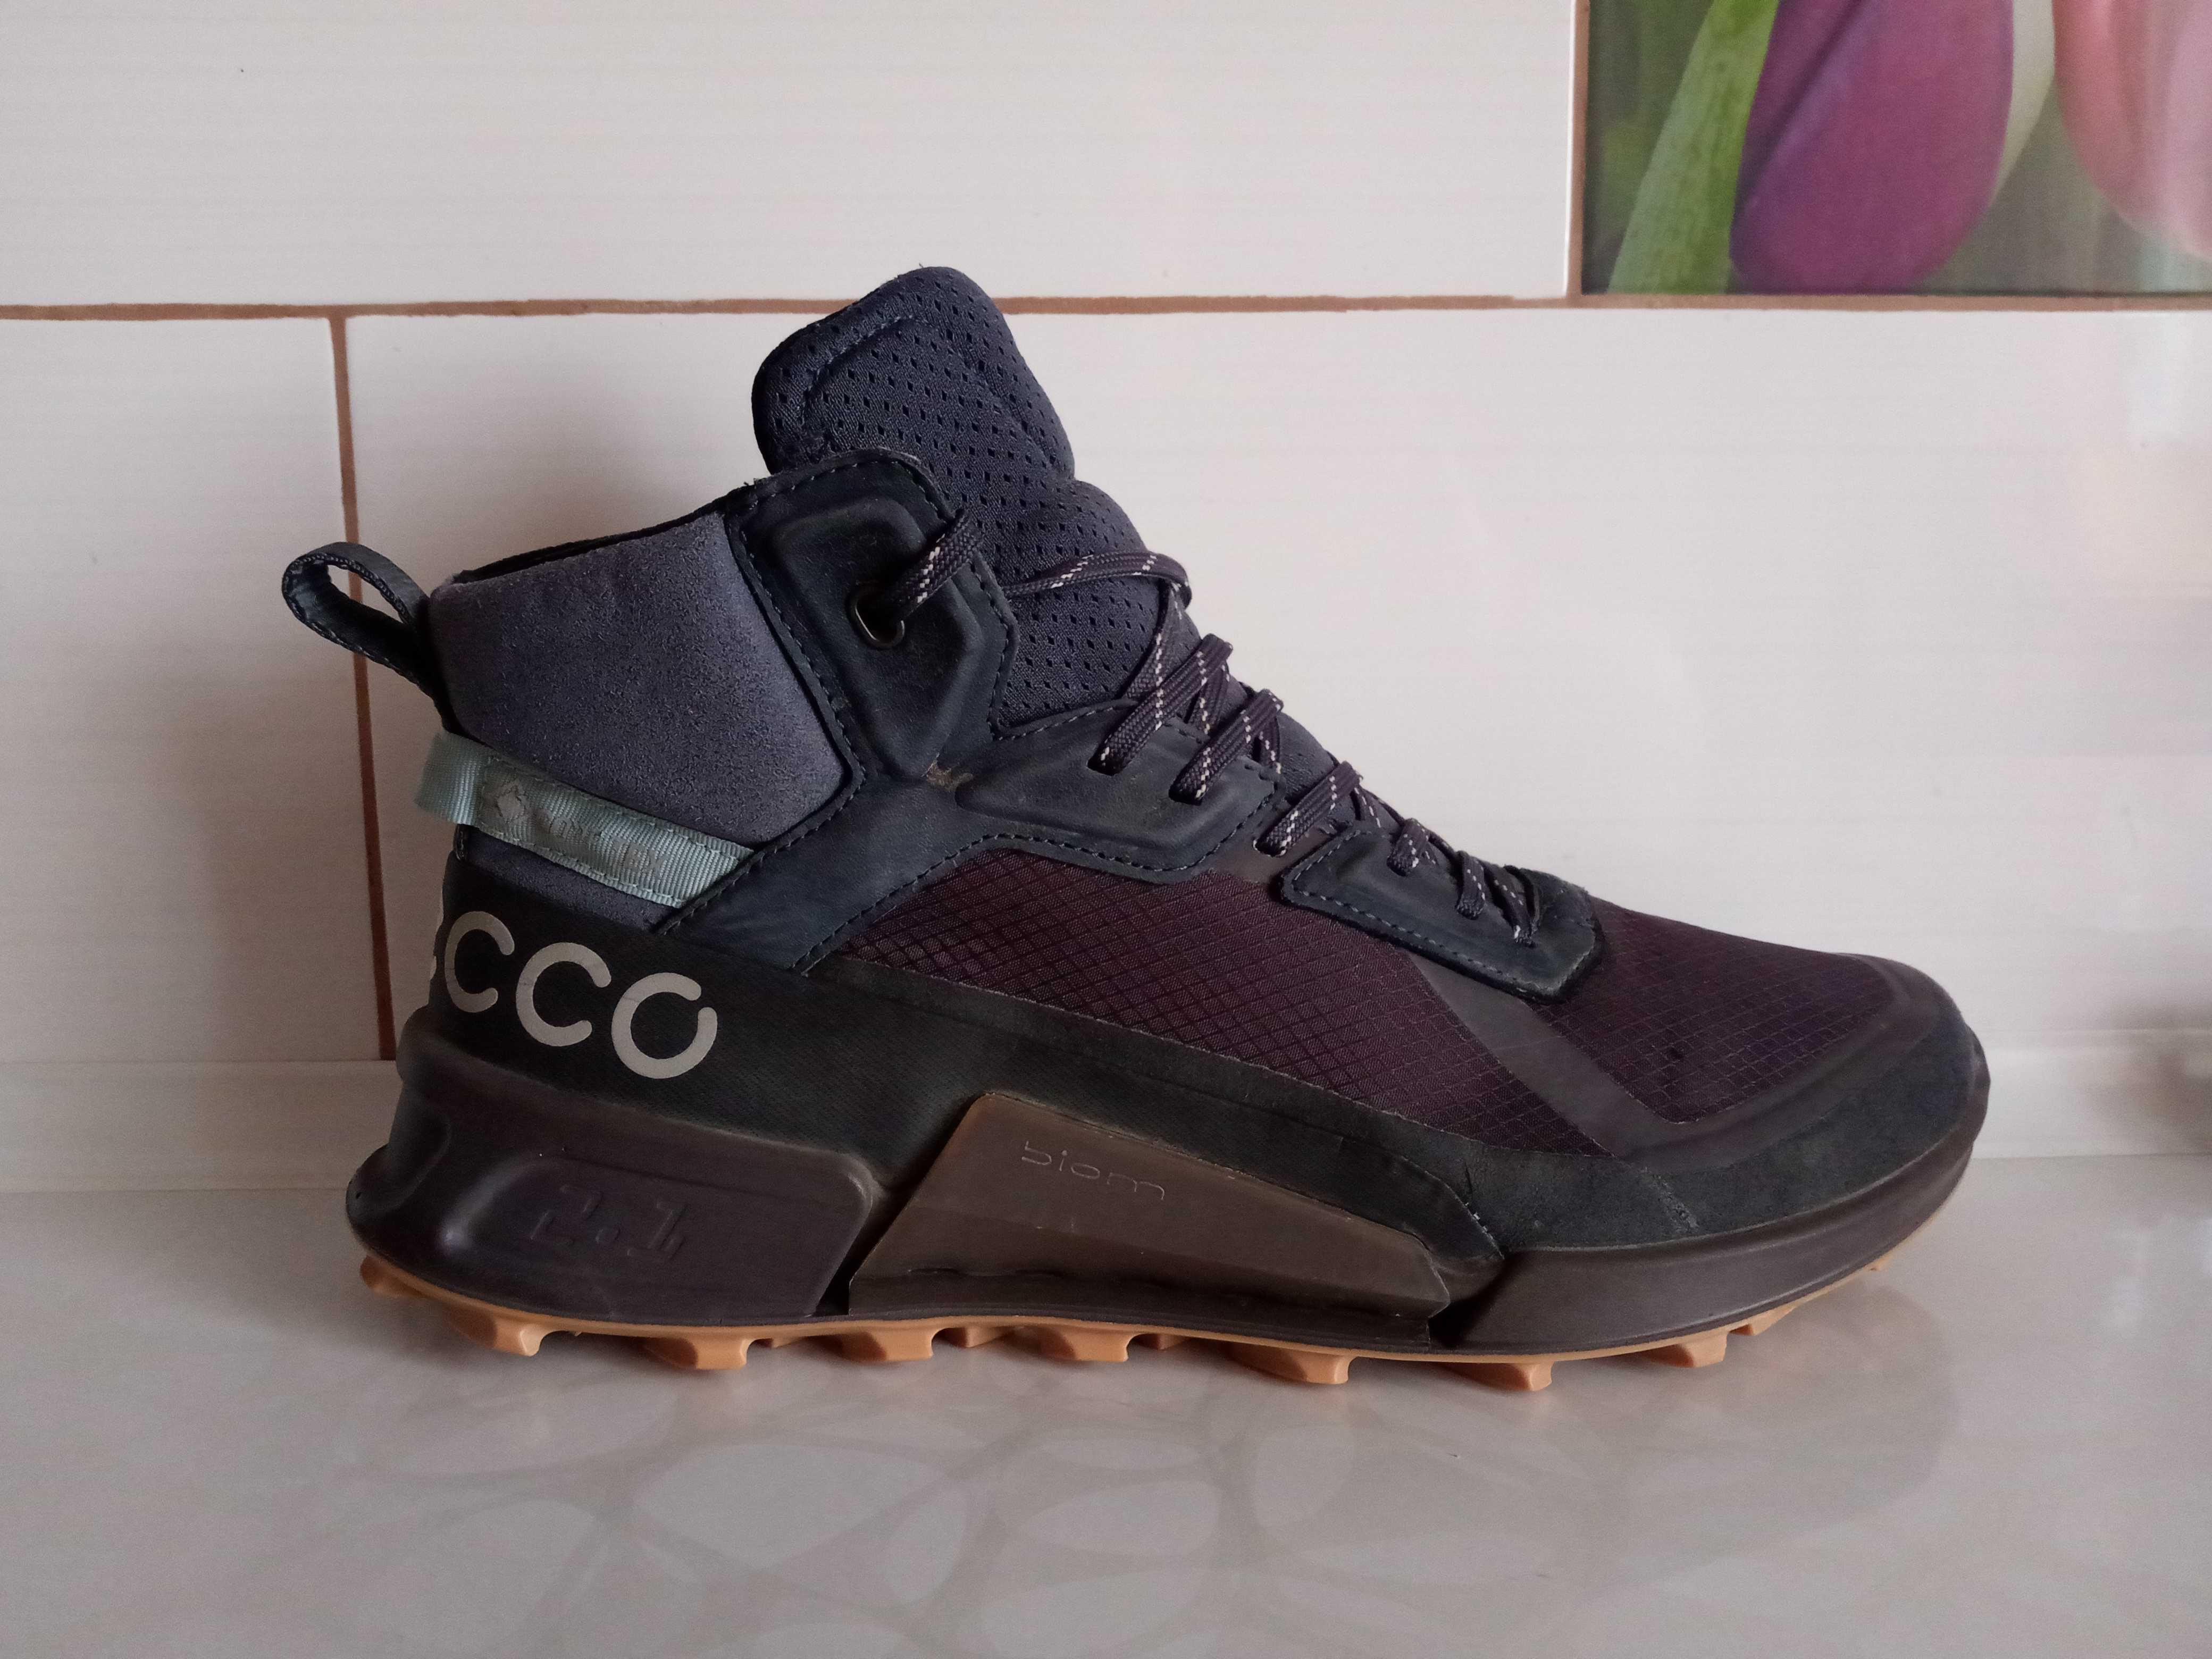 Ботинки Ecco Biom 2.1 X gore-tex 41 размер